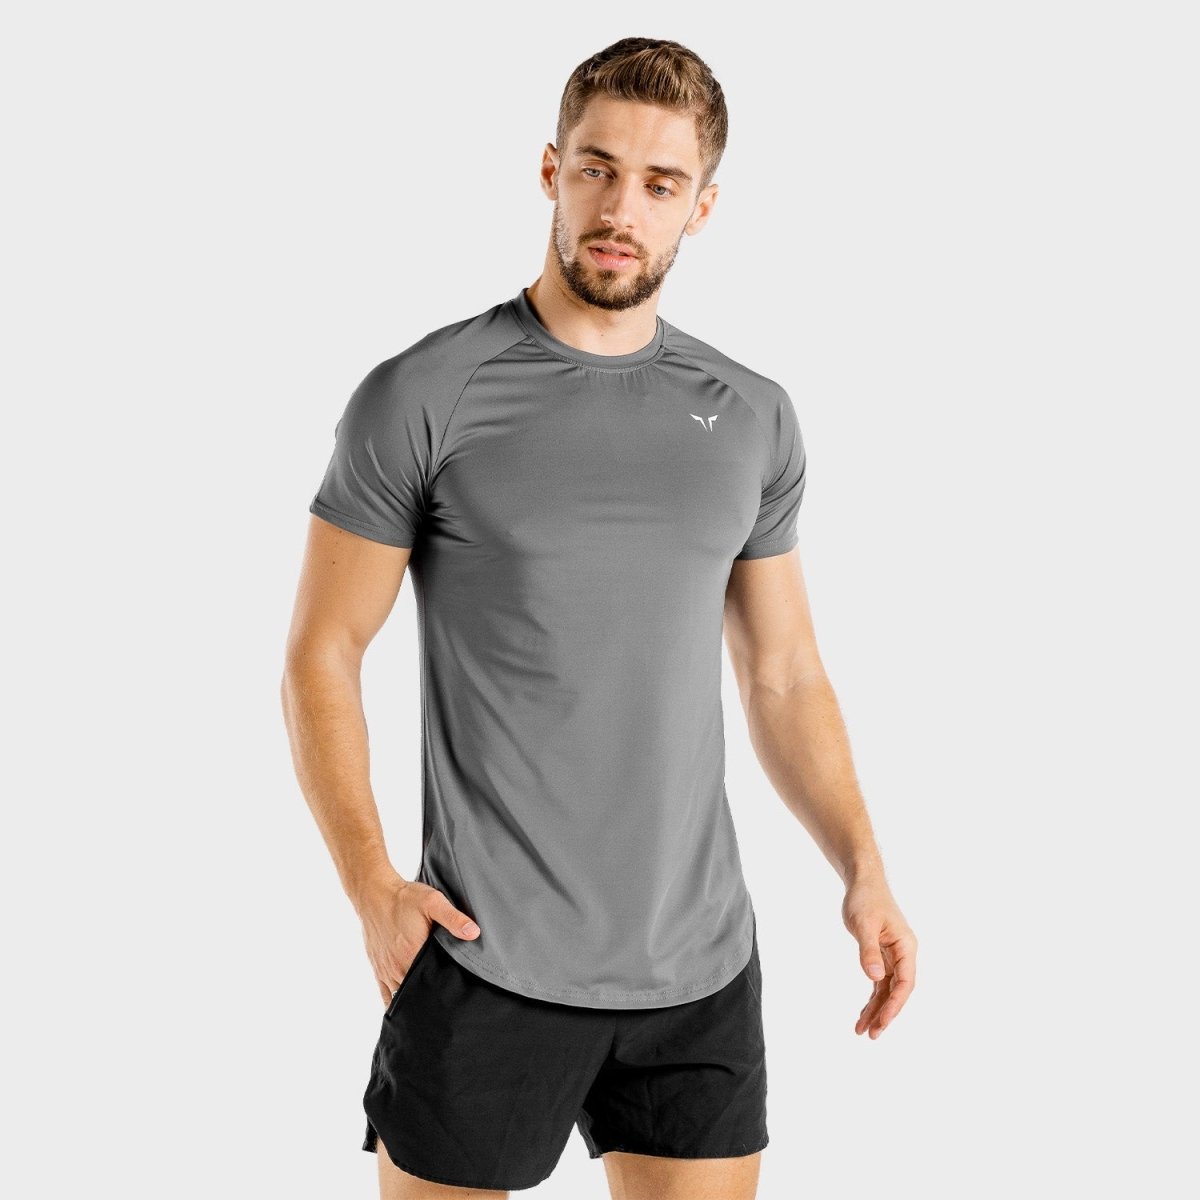 SQUATWOLF Limitless Razor Tee - Charcoal-T-Shirt-Pro Sports